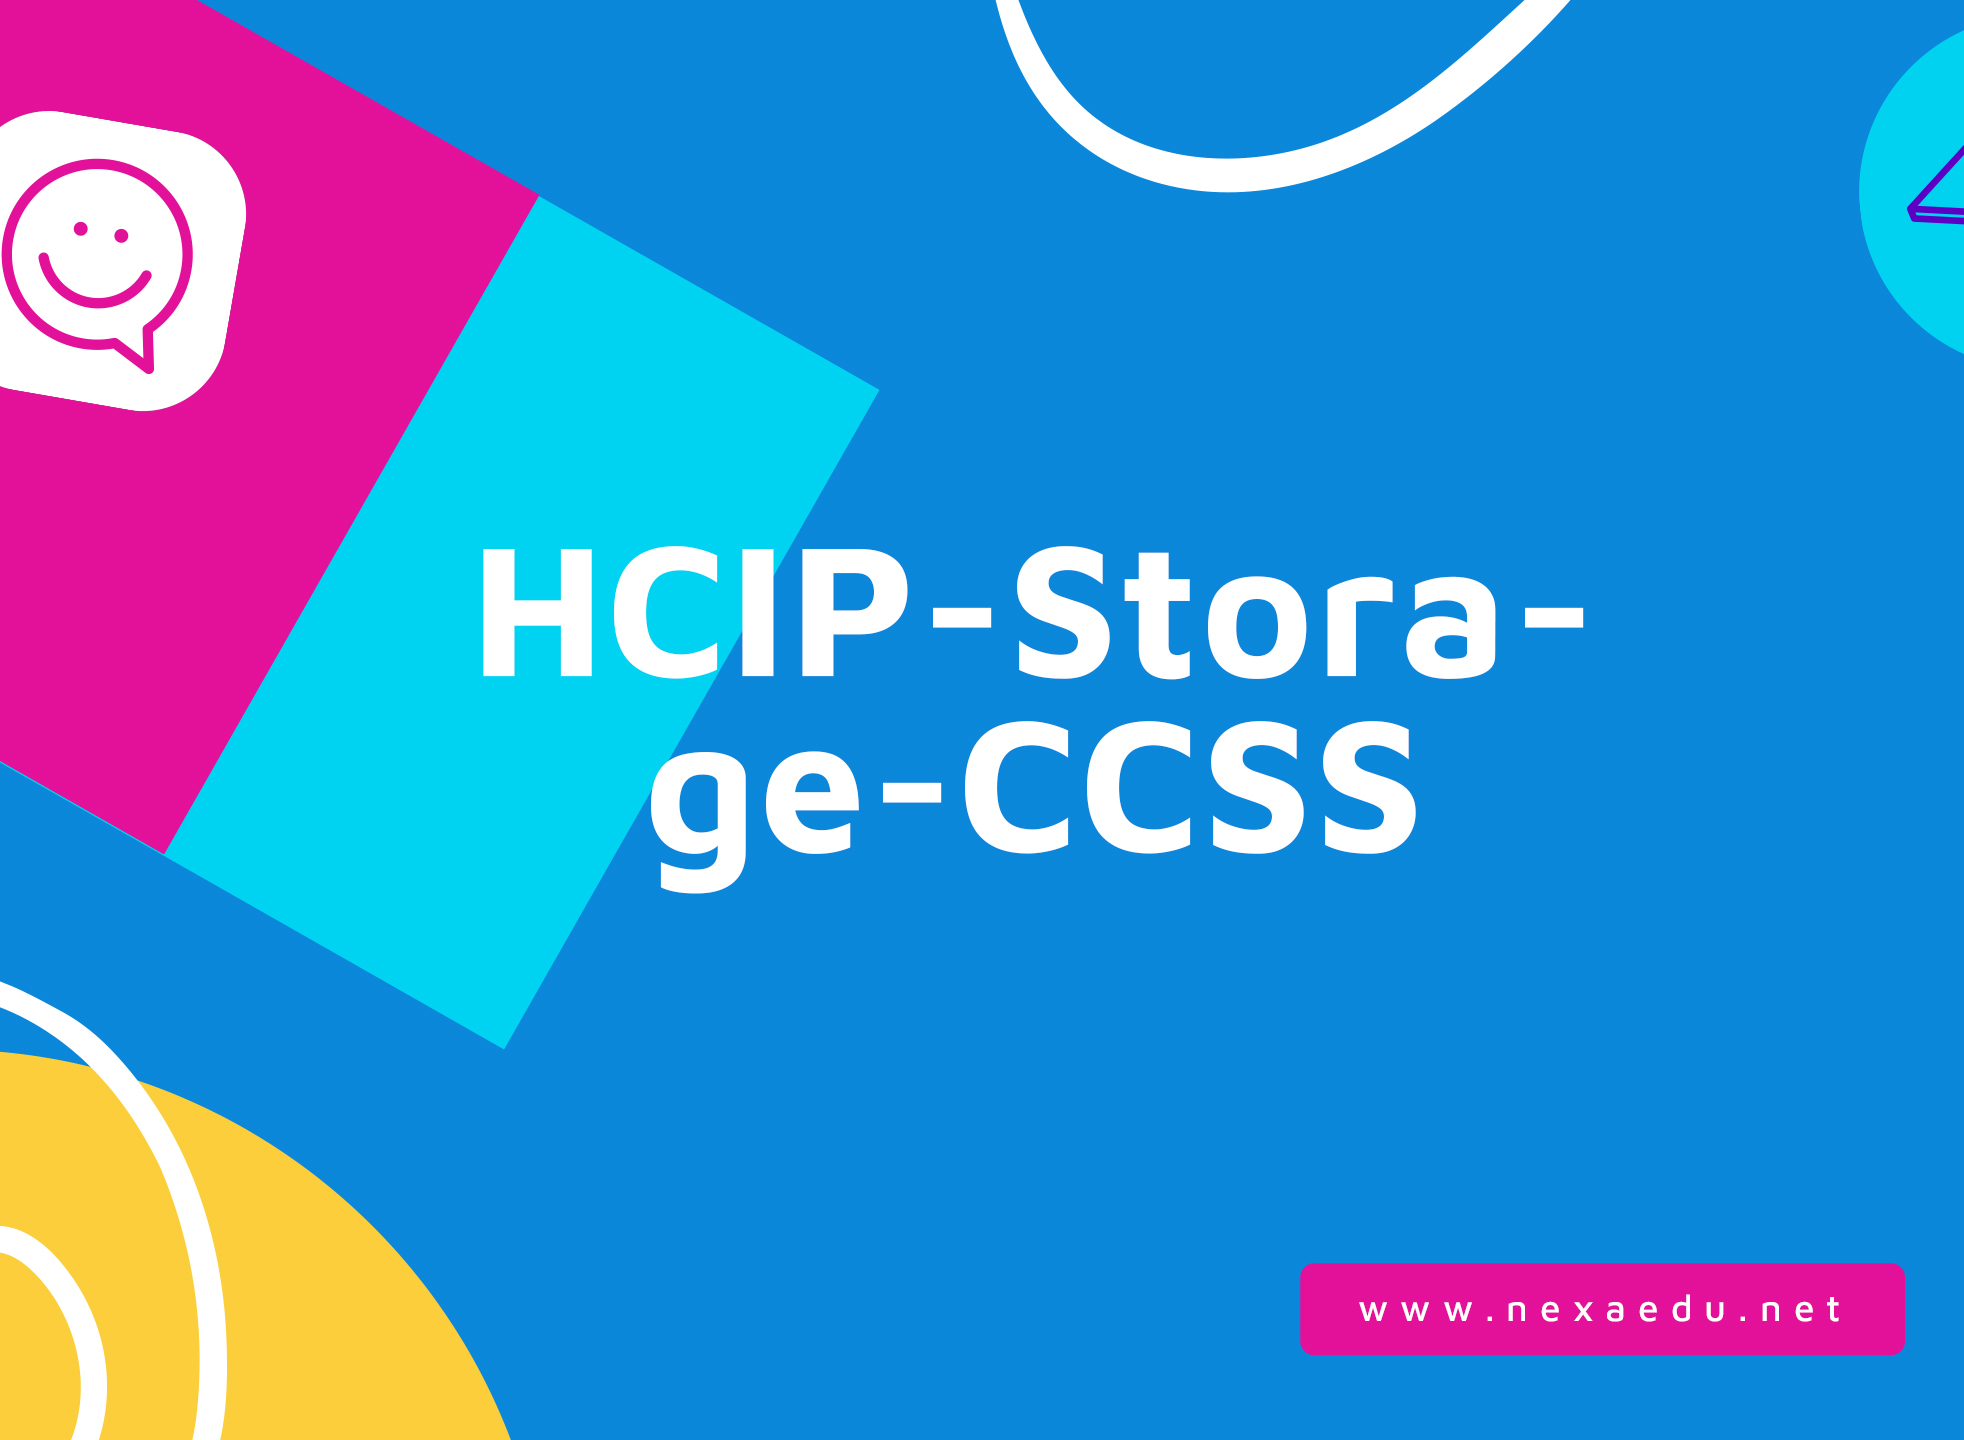 HCIP-Storage-CCSS